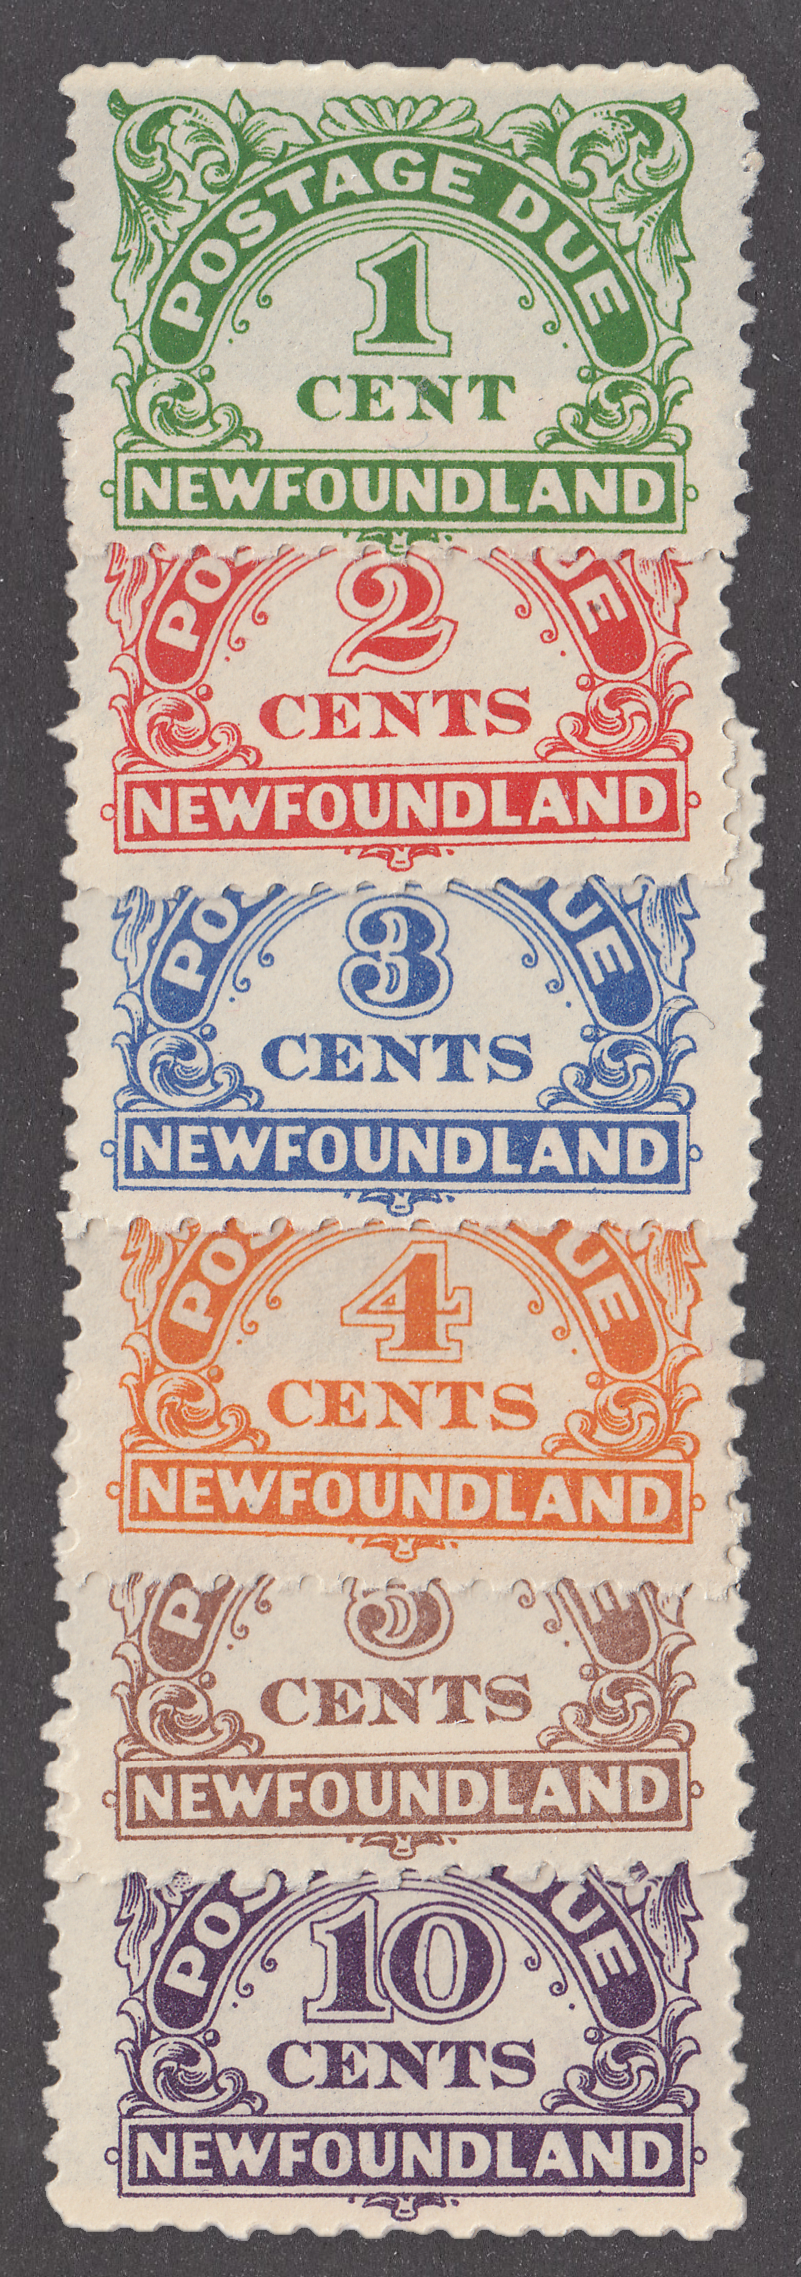 0290NF2202 - Newfoundland J1-J6 - Mint Set